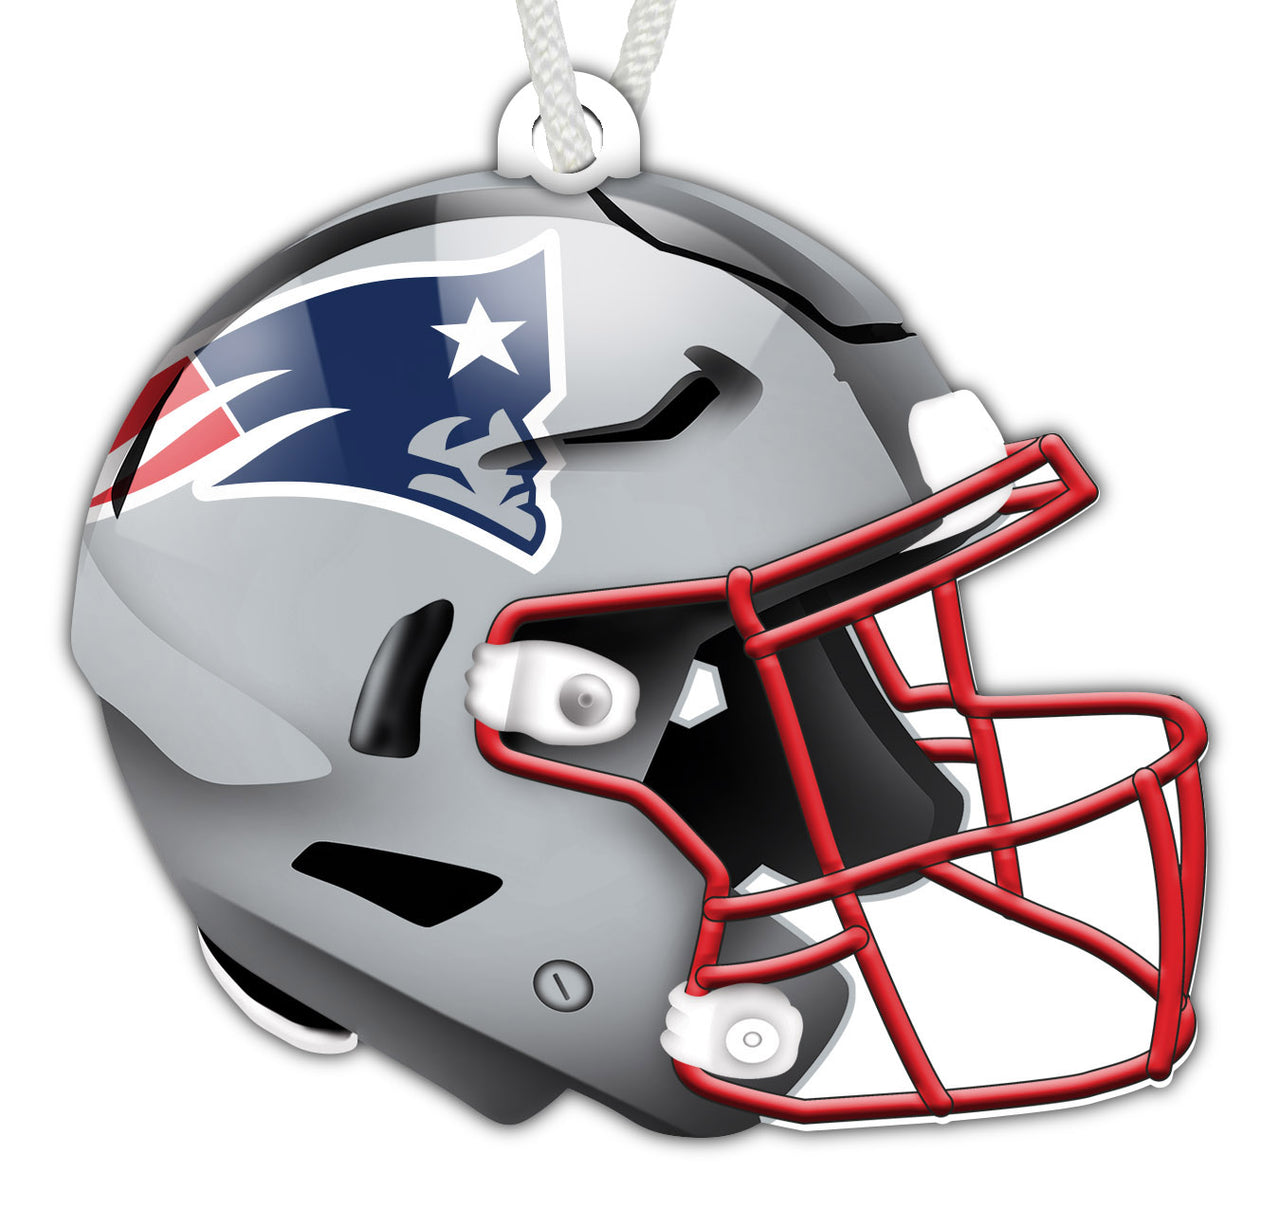 New England Patriots Wooden Helmet Ornament - Dynasty Sports & Framing 